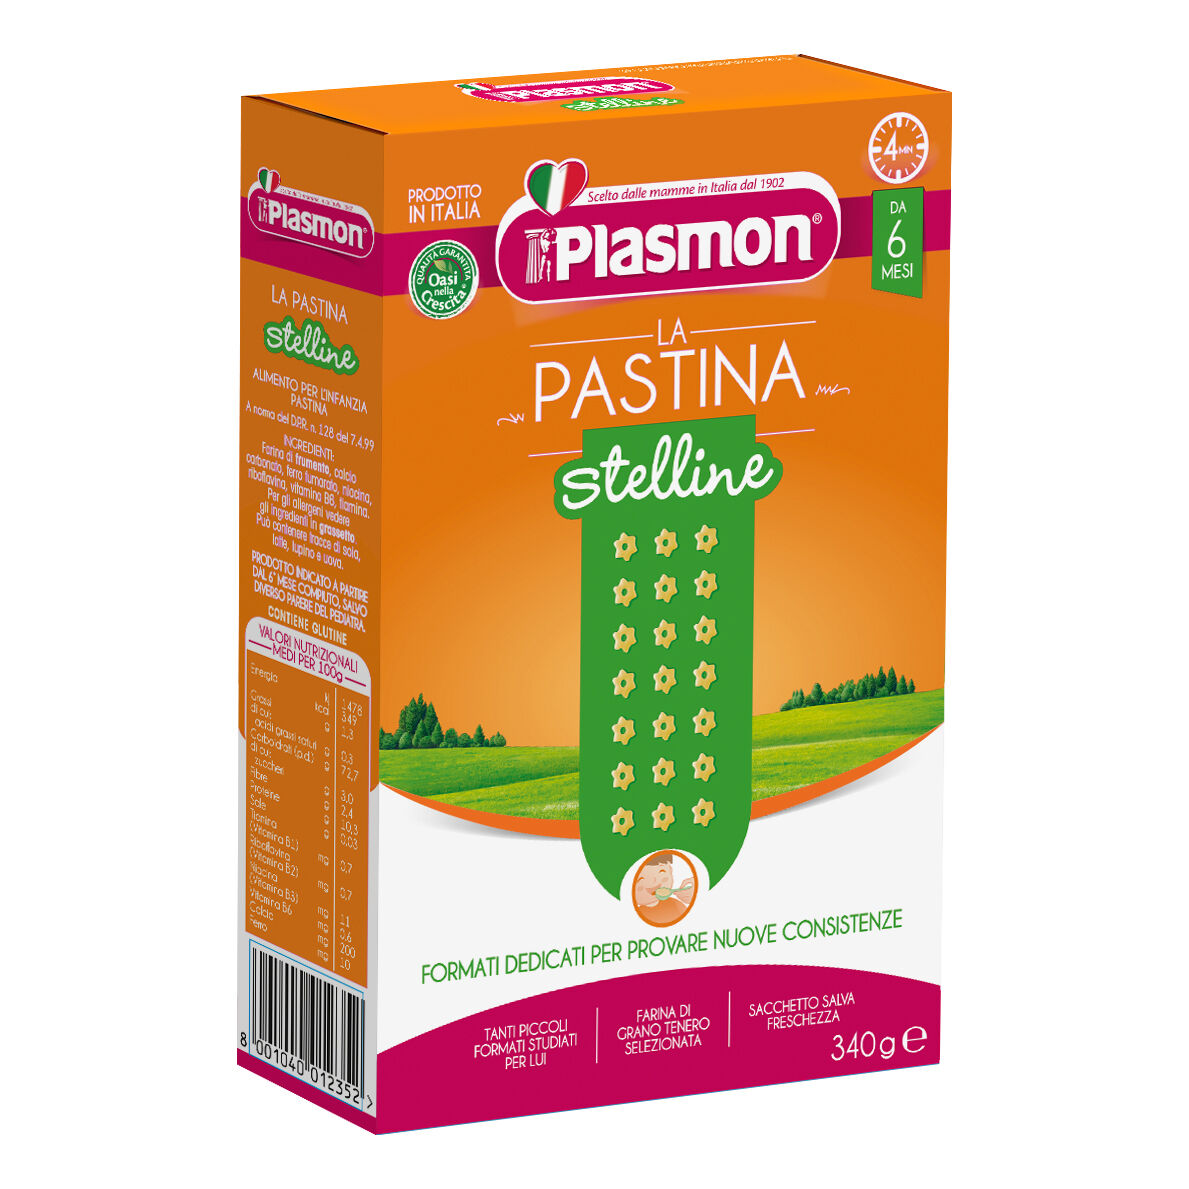 Plasmon (Heinz Italia Spa) Pastina Stelline 340g